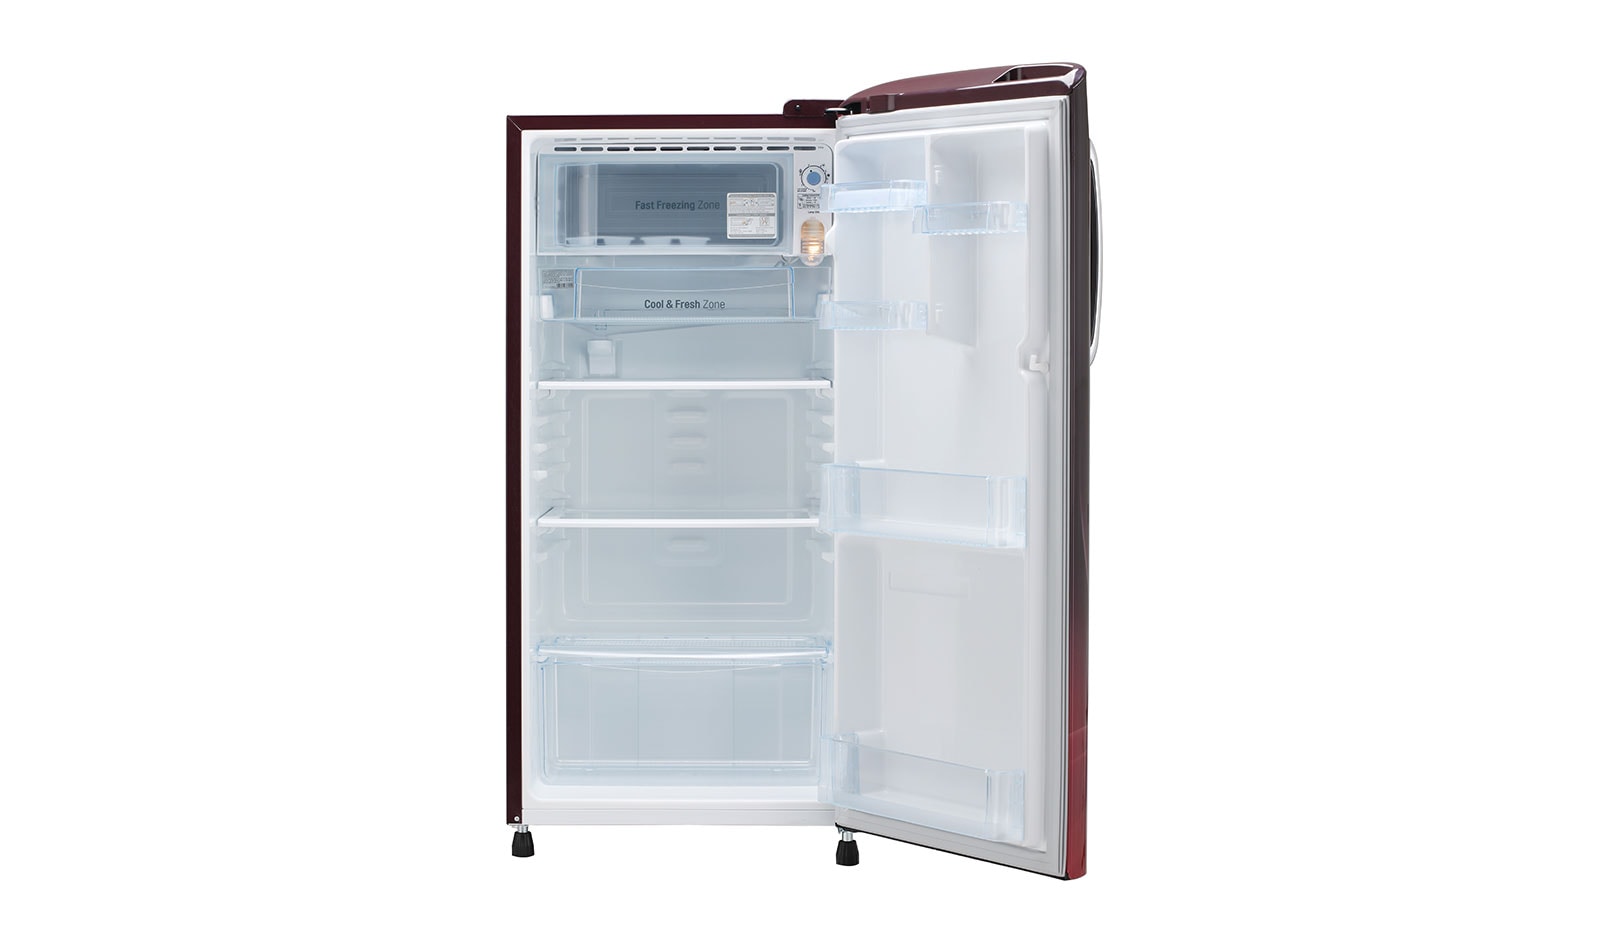 LG Refrigerator 190 L, Smart Inverter Compressor GL-B201ASPX